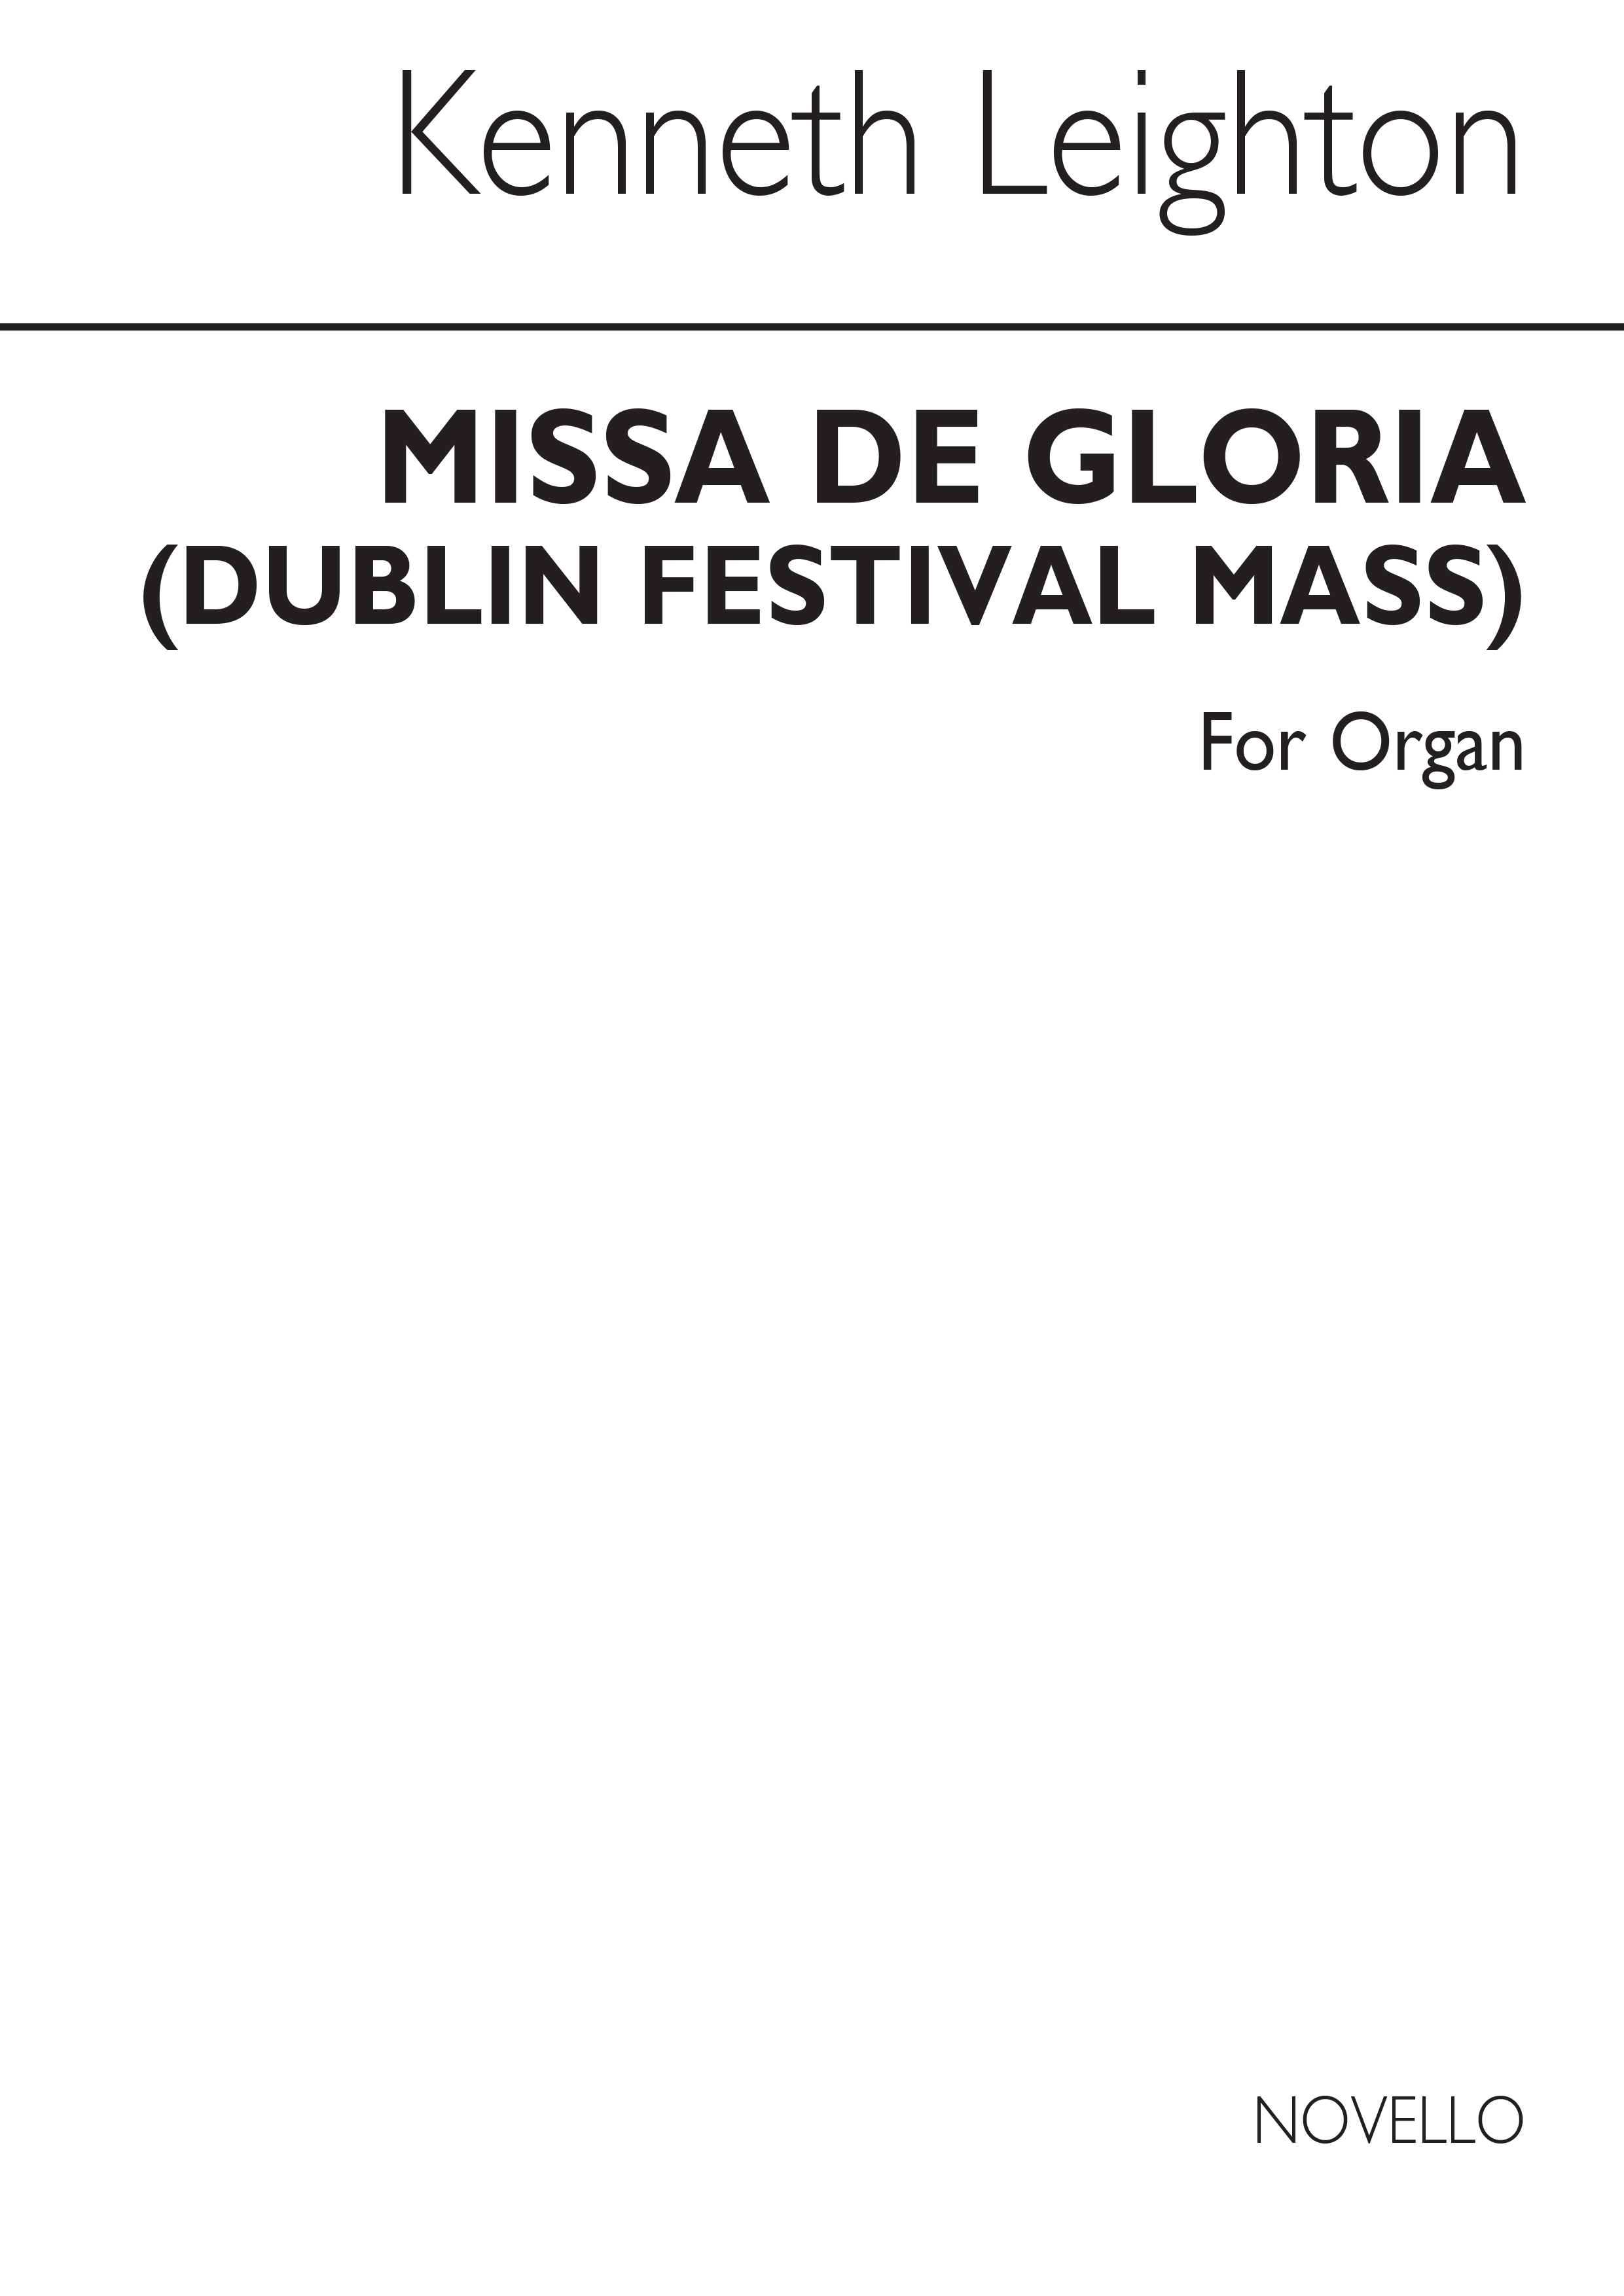 Kenneth Leighton: Missa De Gloria Op. 82: Organ: Instrumental Work